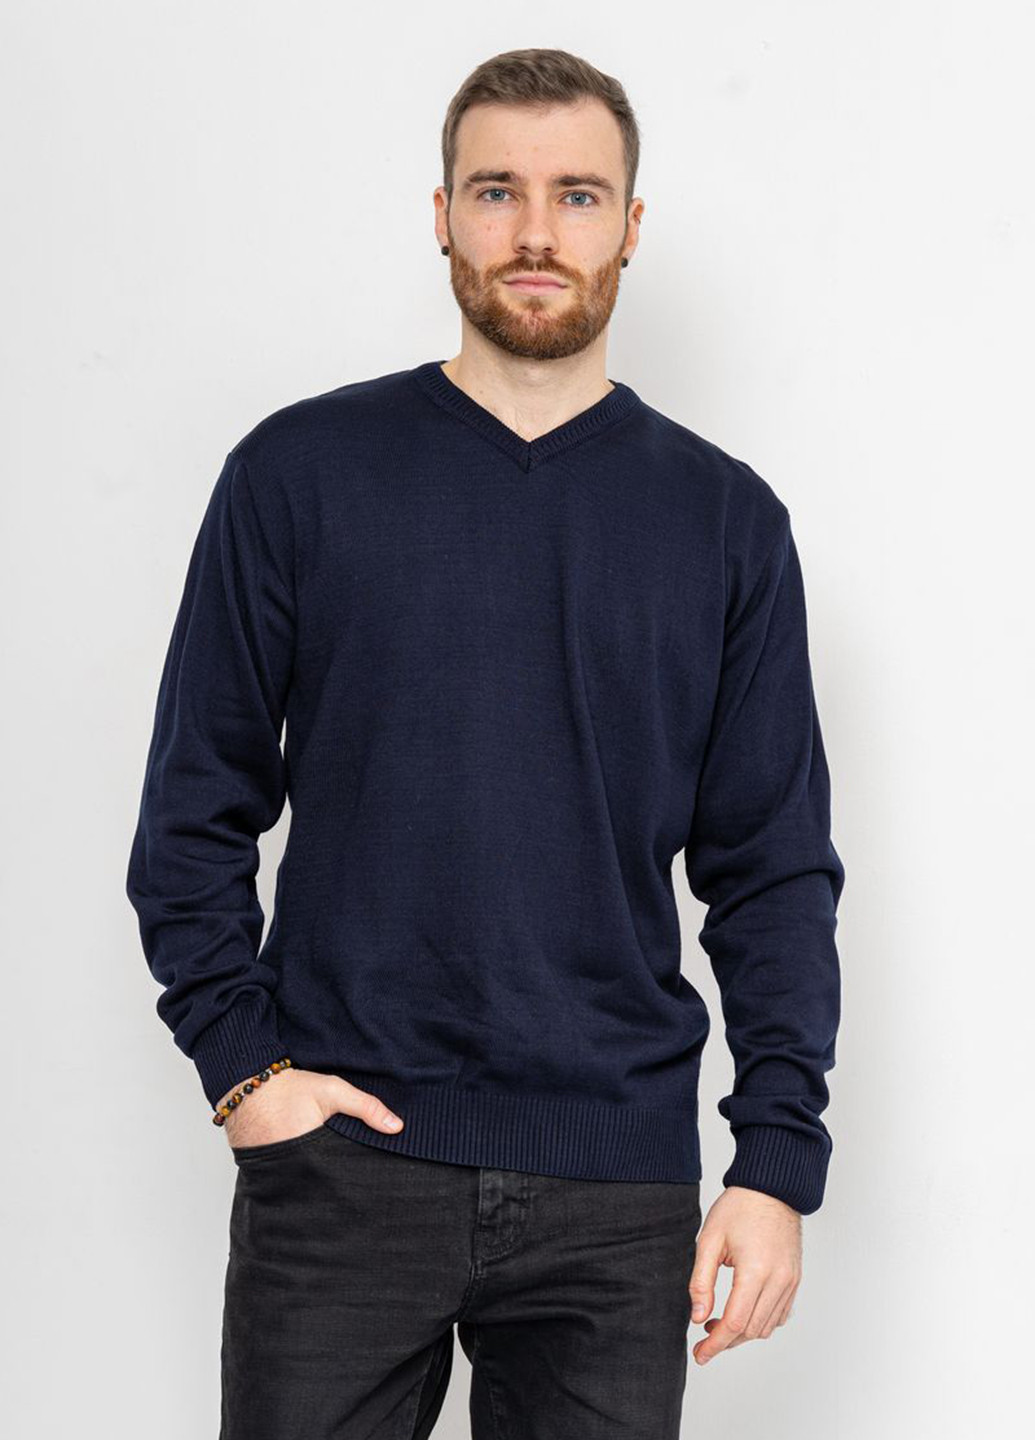 Темно-синий демисезонный пуловер пуловер Ager